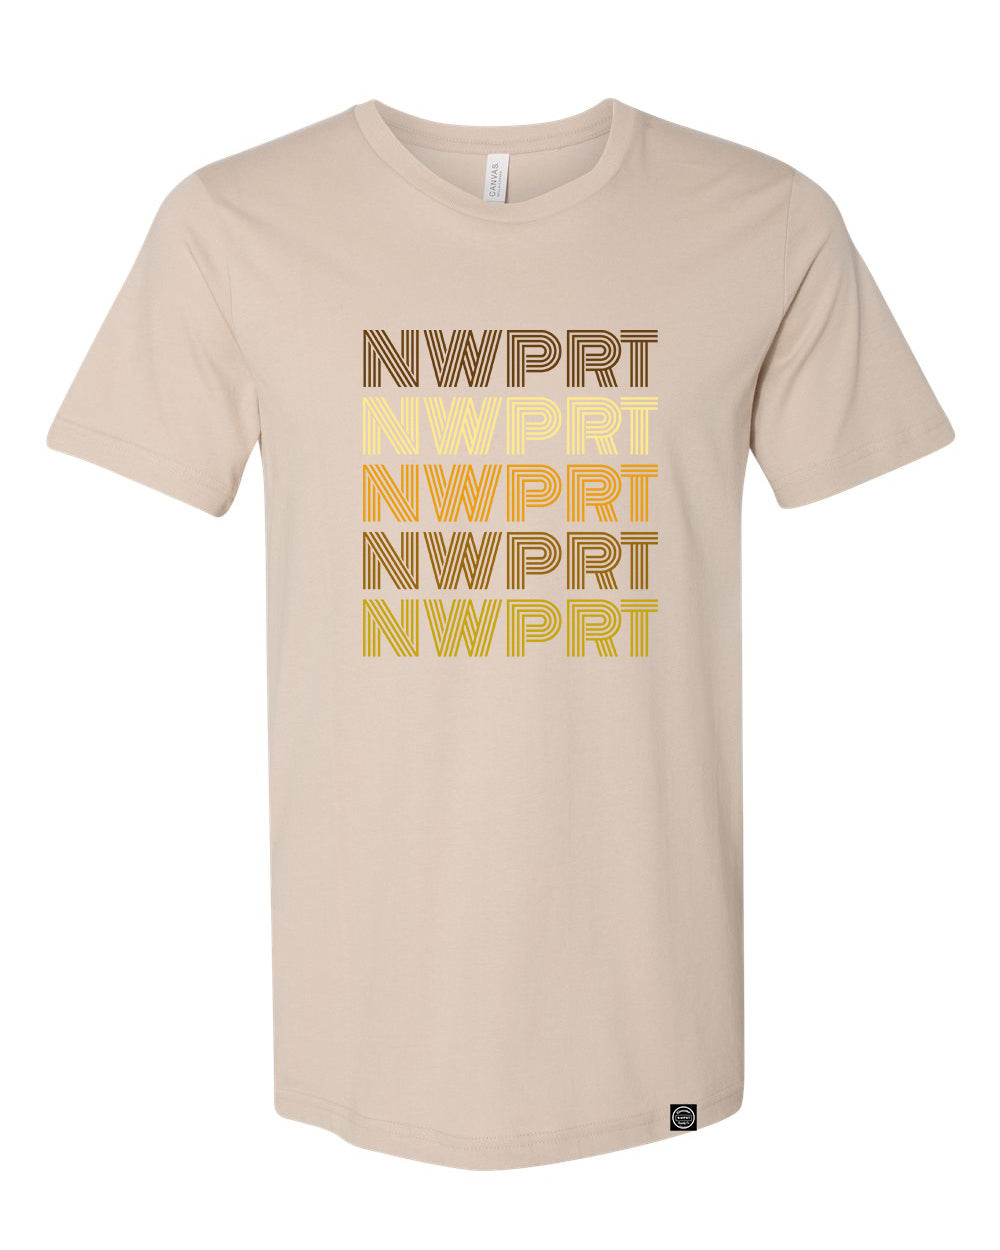 NWPRT Retro Vibes Earth Tones T-Shirt